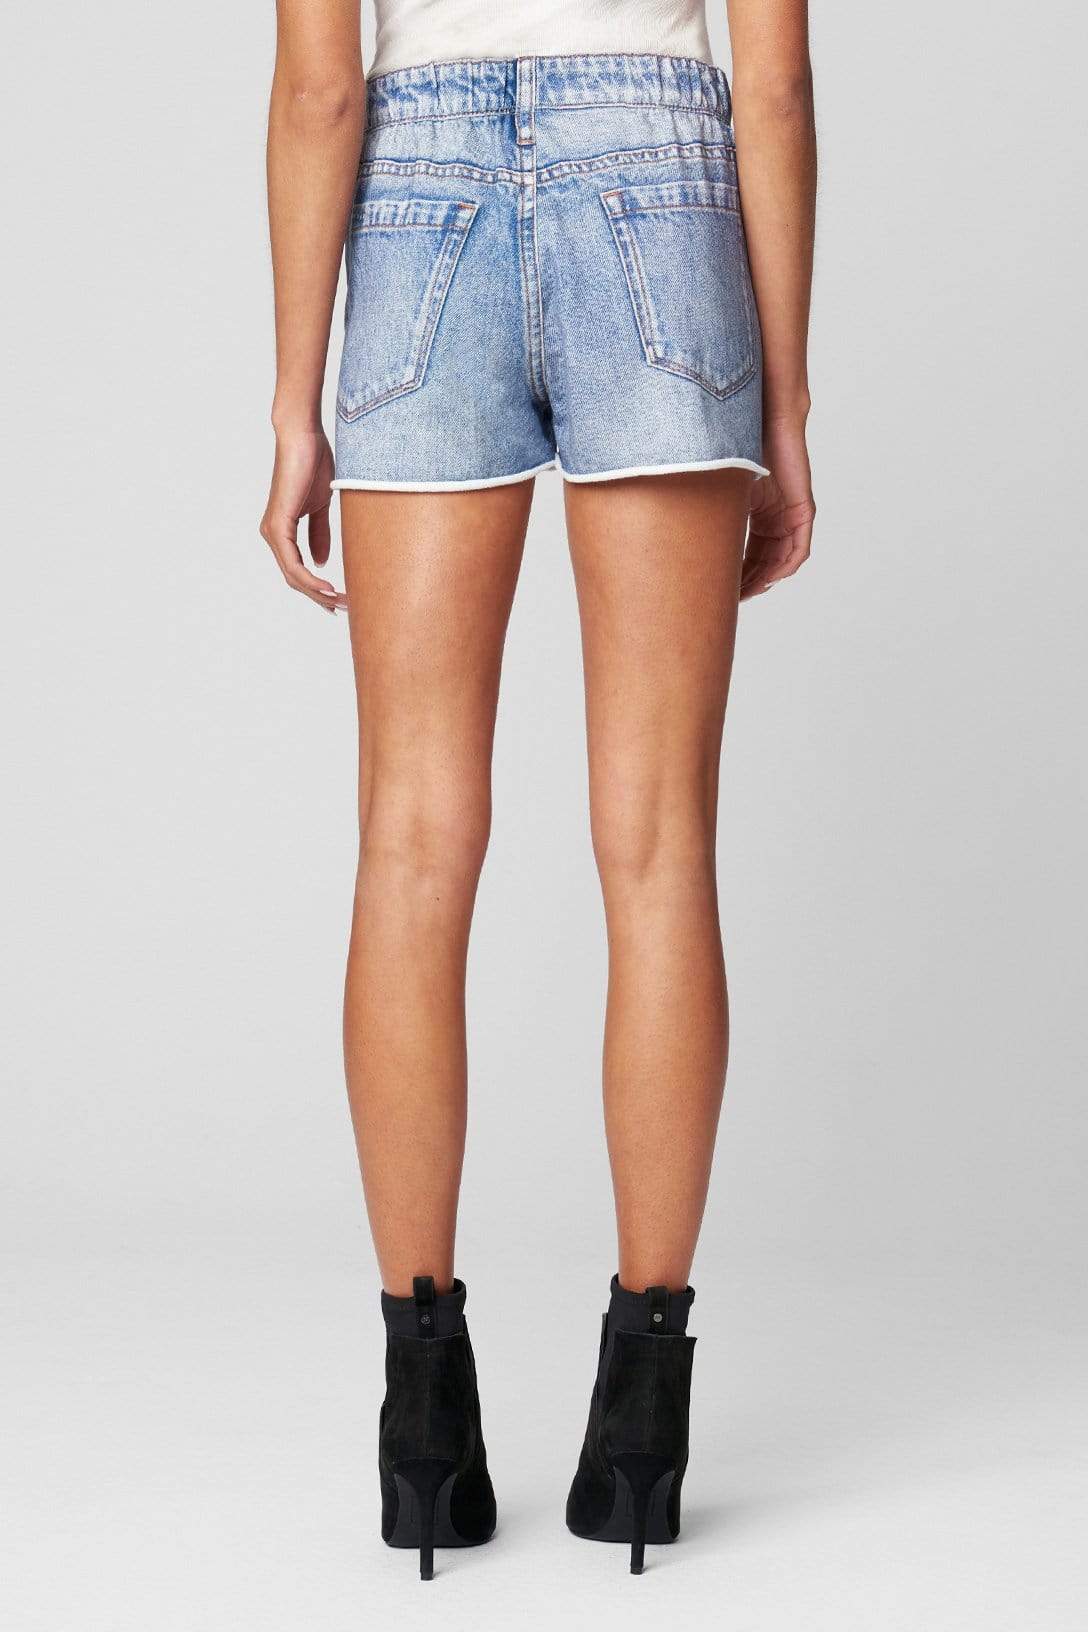 Yes Please High Rise Cut Off Denim Short, Denim Shorts by Blank NYC | LIT Boutique